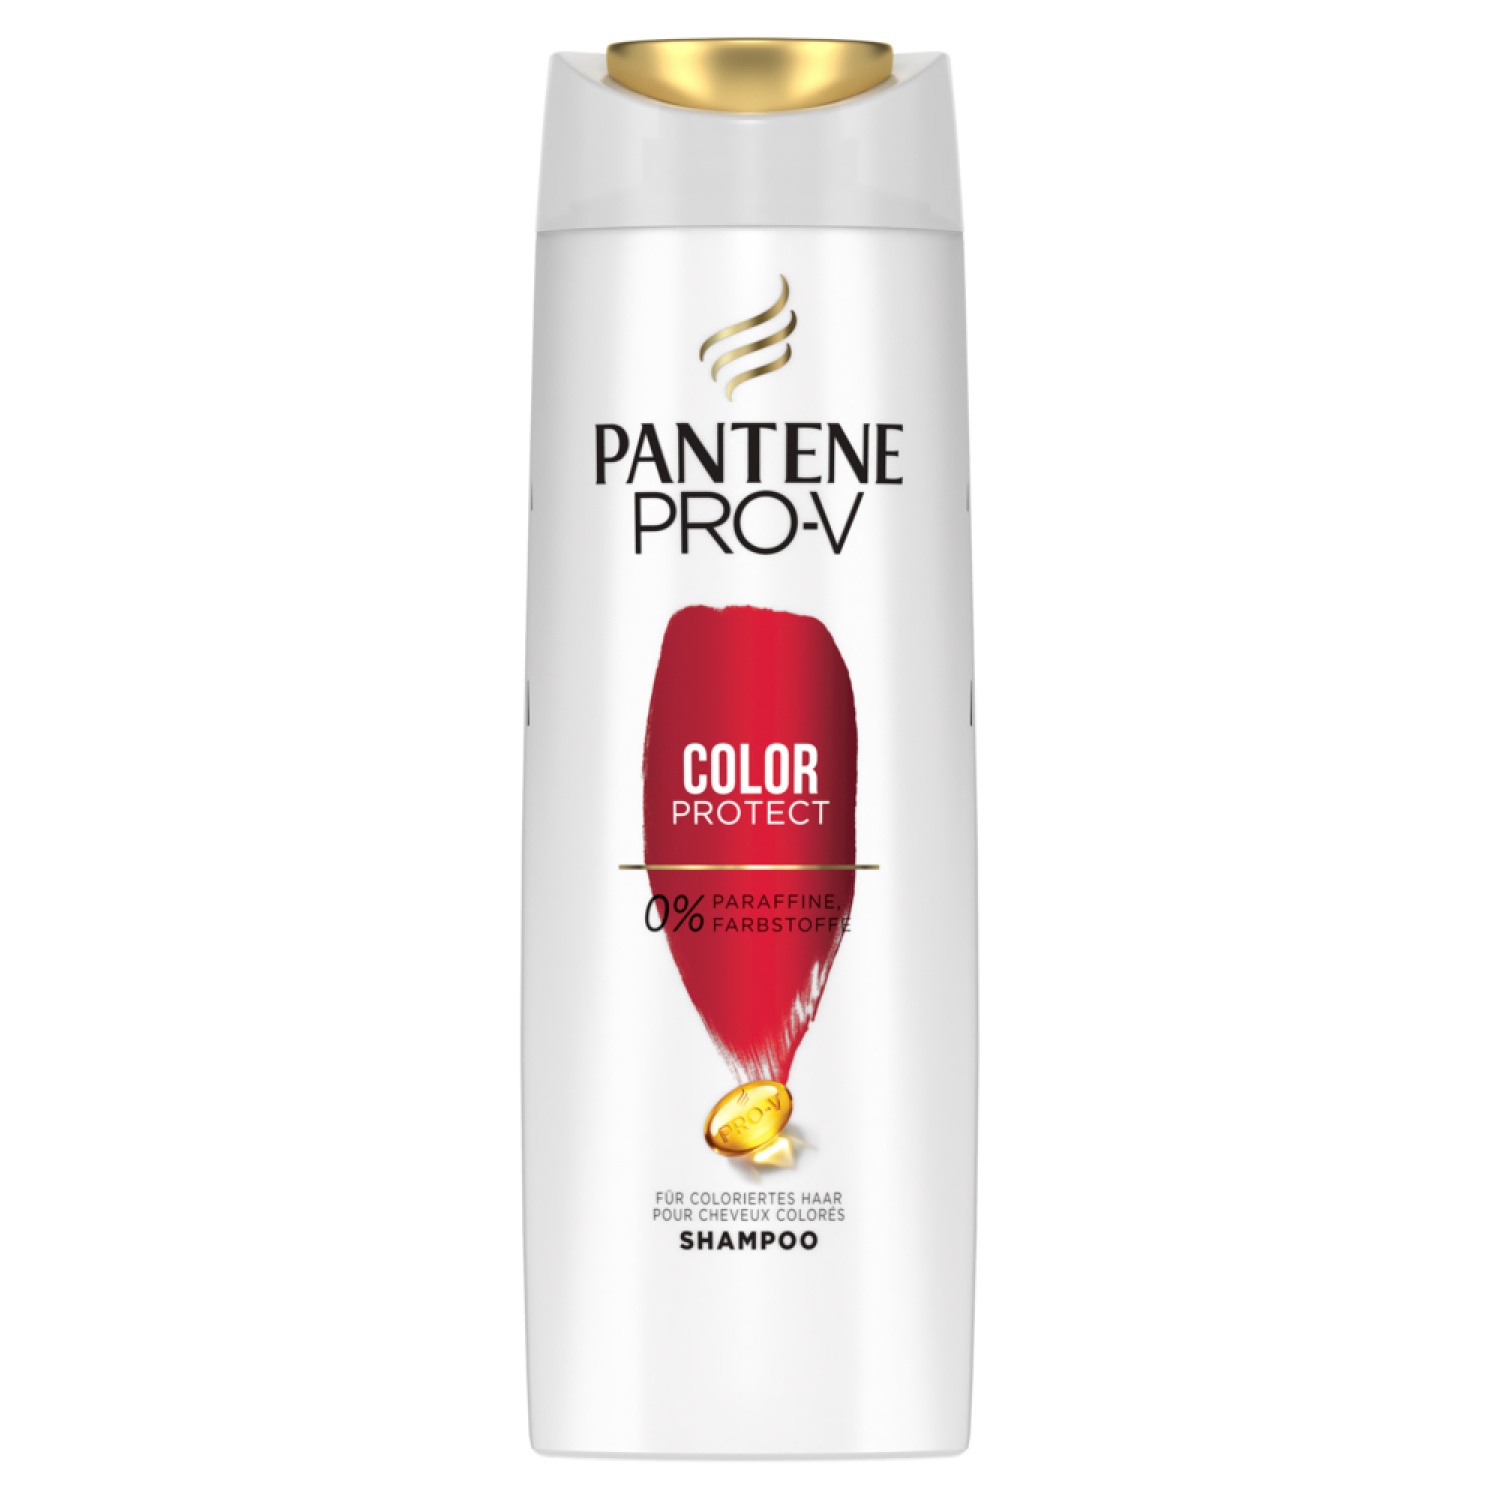 PANTENE Pro-V Shampoo 500 ml